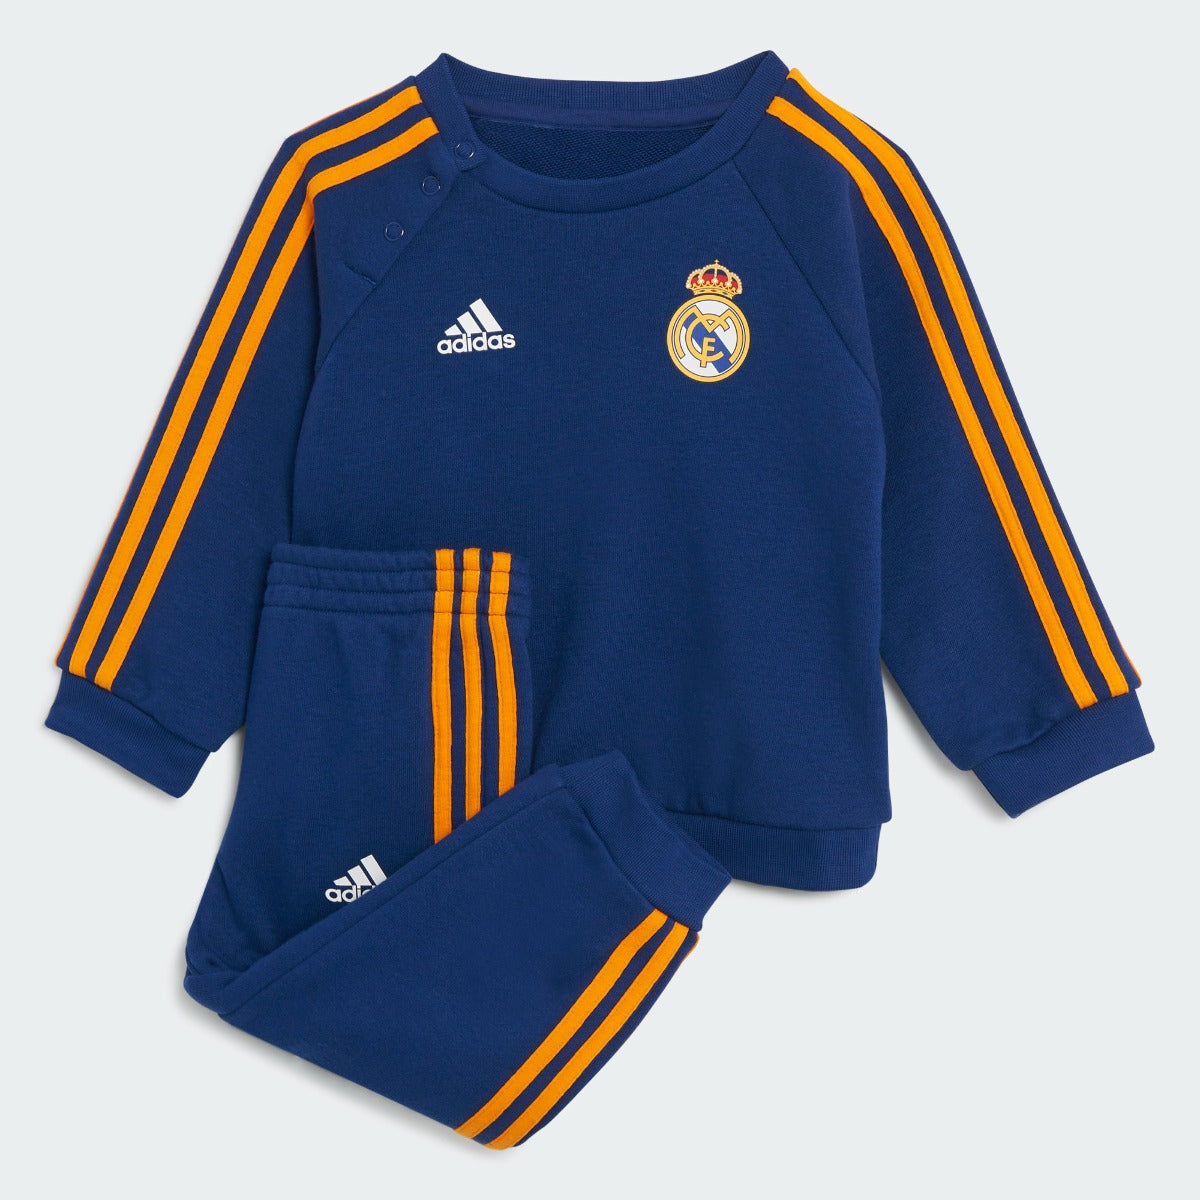 Adidas, Adidas 2021-22 Real Madrid 3 Stripes Baby Jogger - Victory Blue